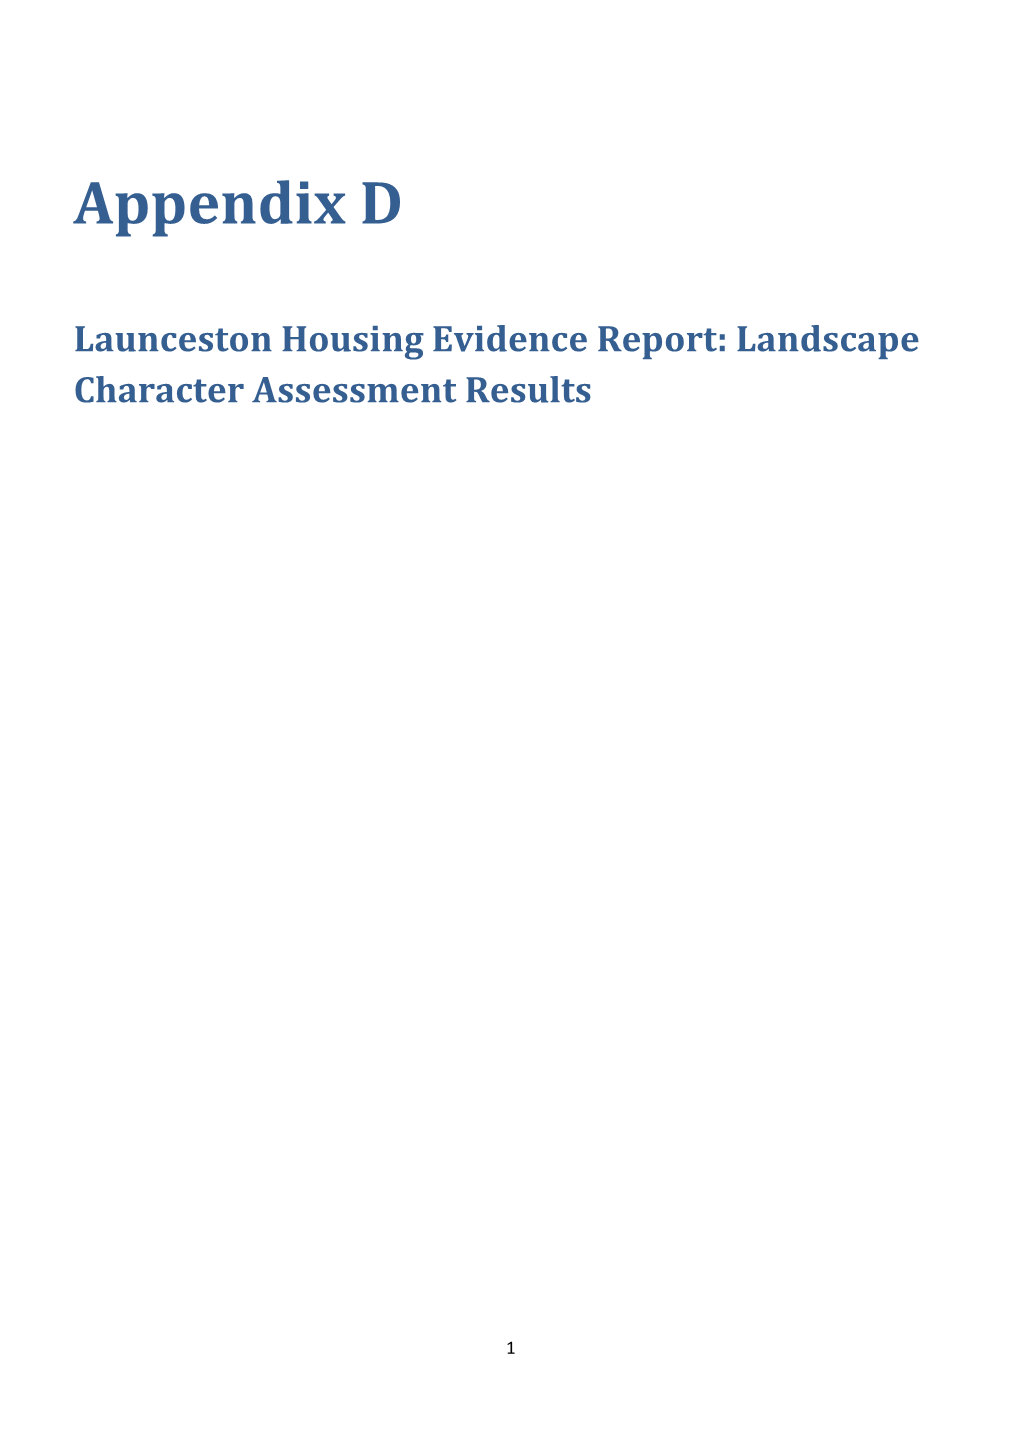 Housing Evidence Report App D